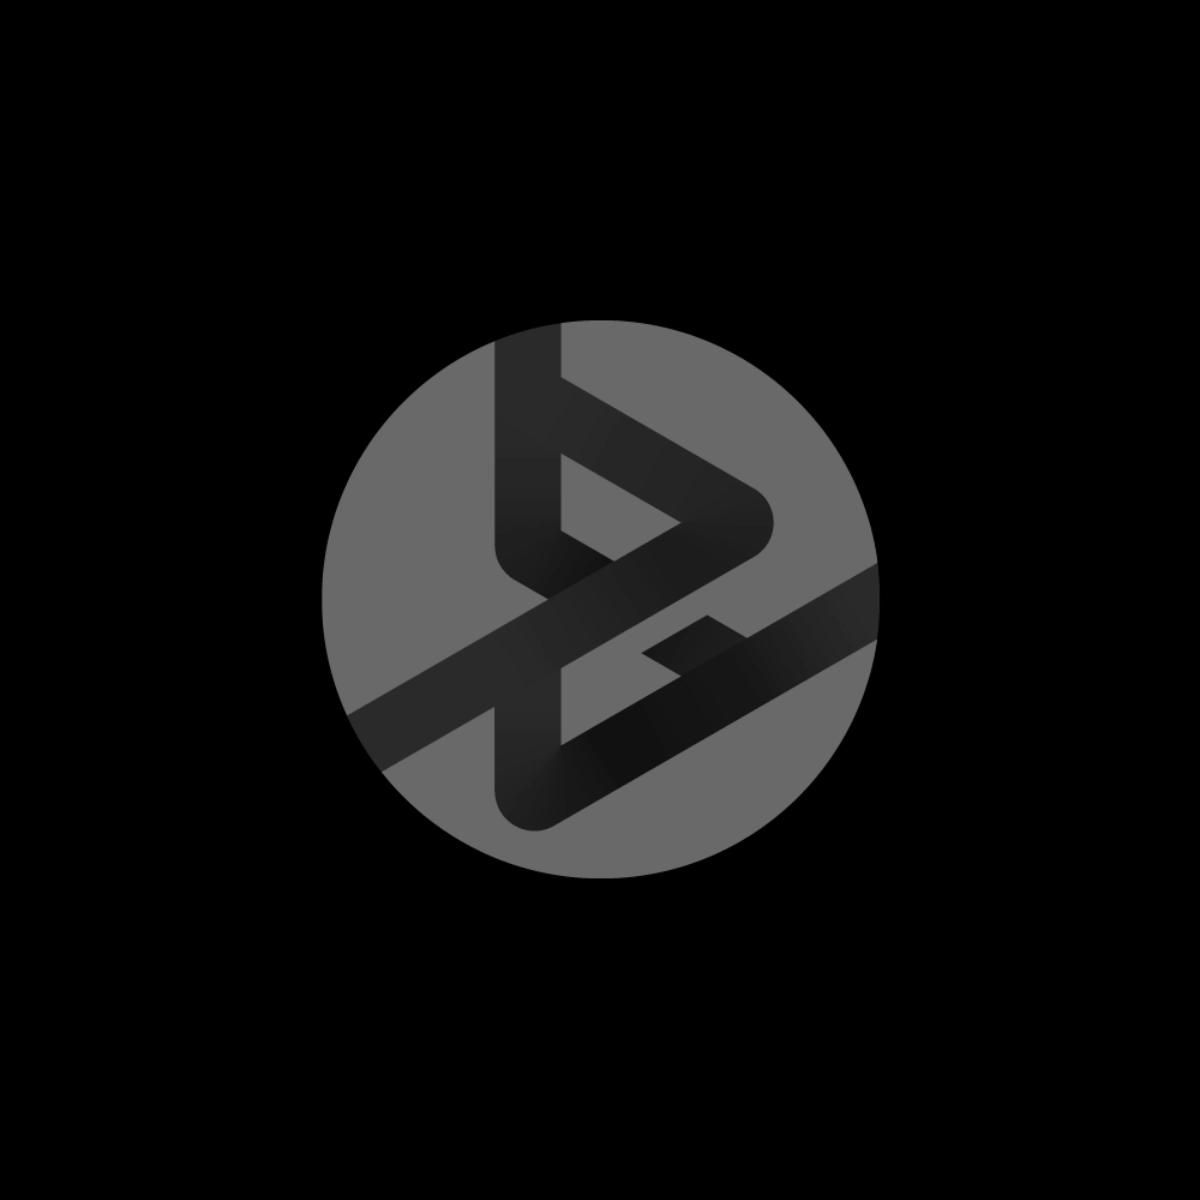 Letter B logo - How to design a simple text logo | Illustrator tutorial -   18 fitness Gym logo ideas